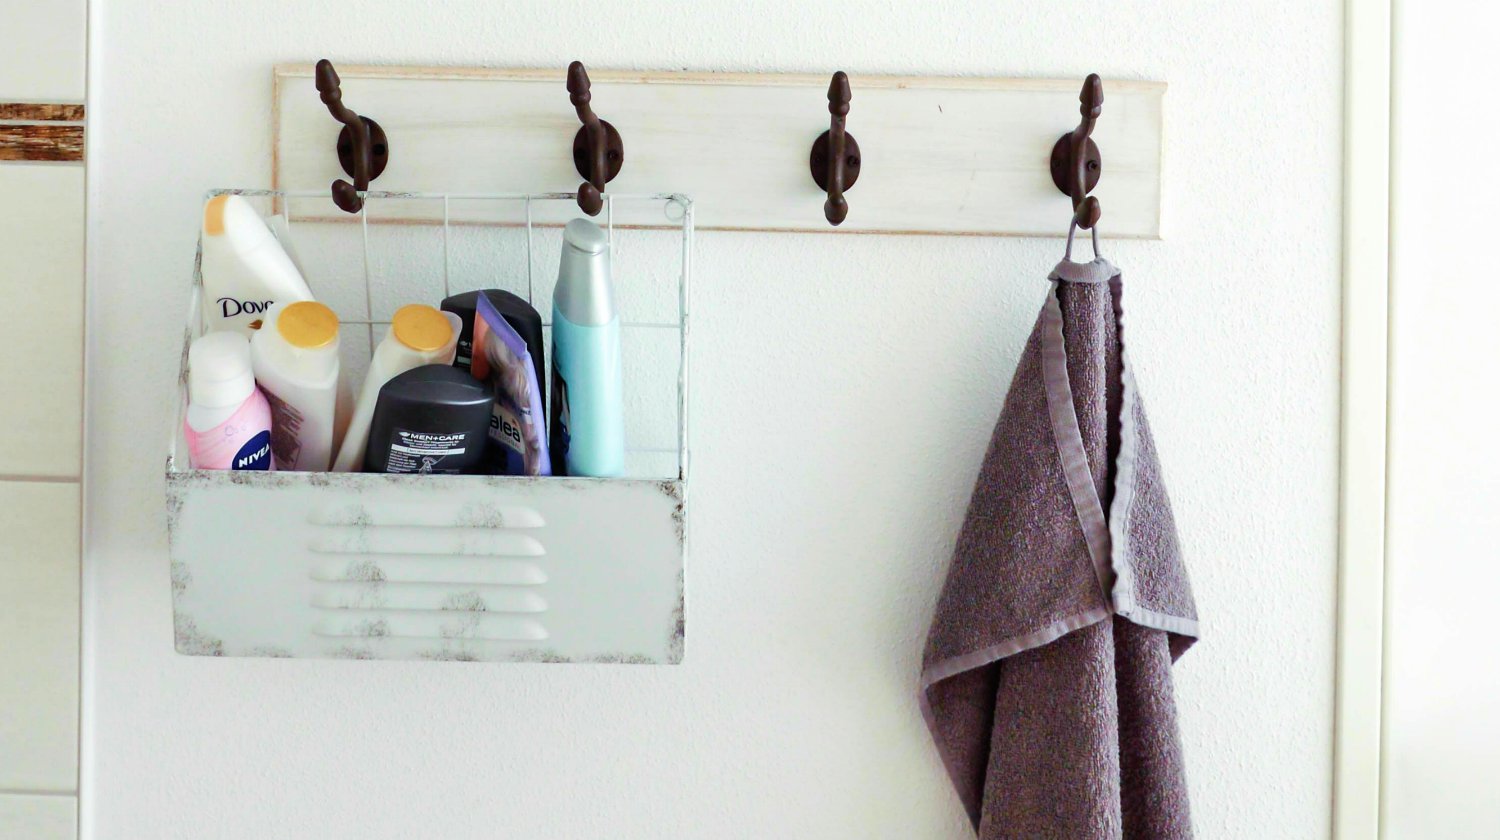 https://robemart.com/blog/wp-content/uploads/2019/06/f1URIvy-Yg8-wall-hooks-toiletries-and-towel-bathroom-accessories-us-Featured.jpg